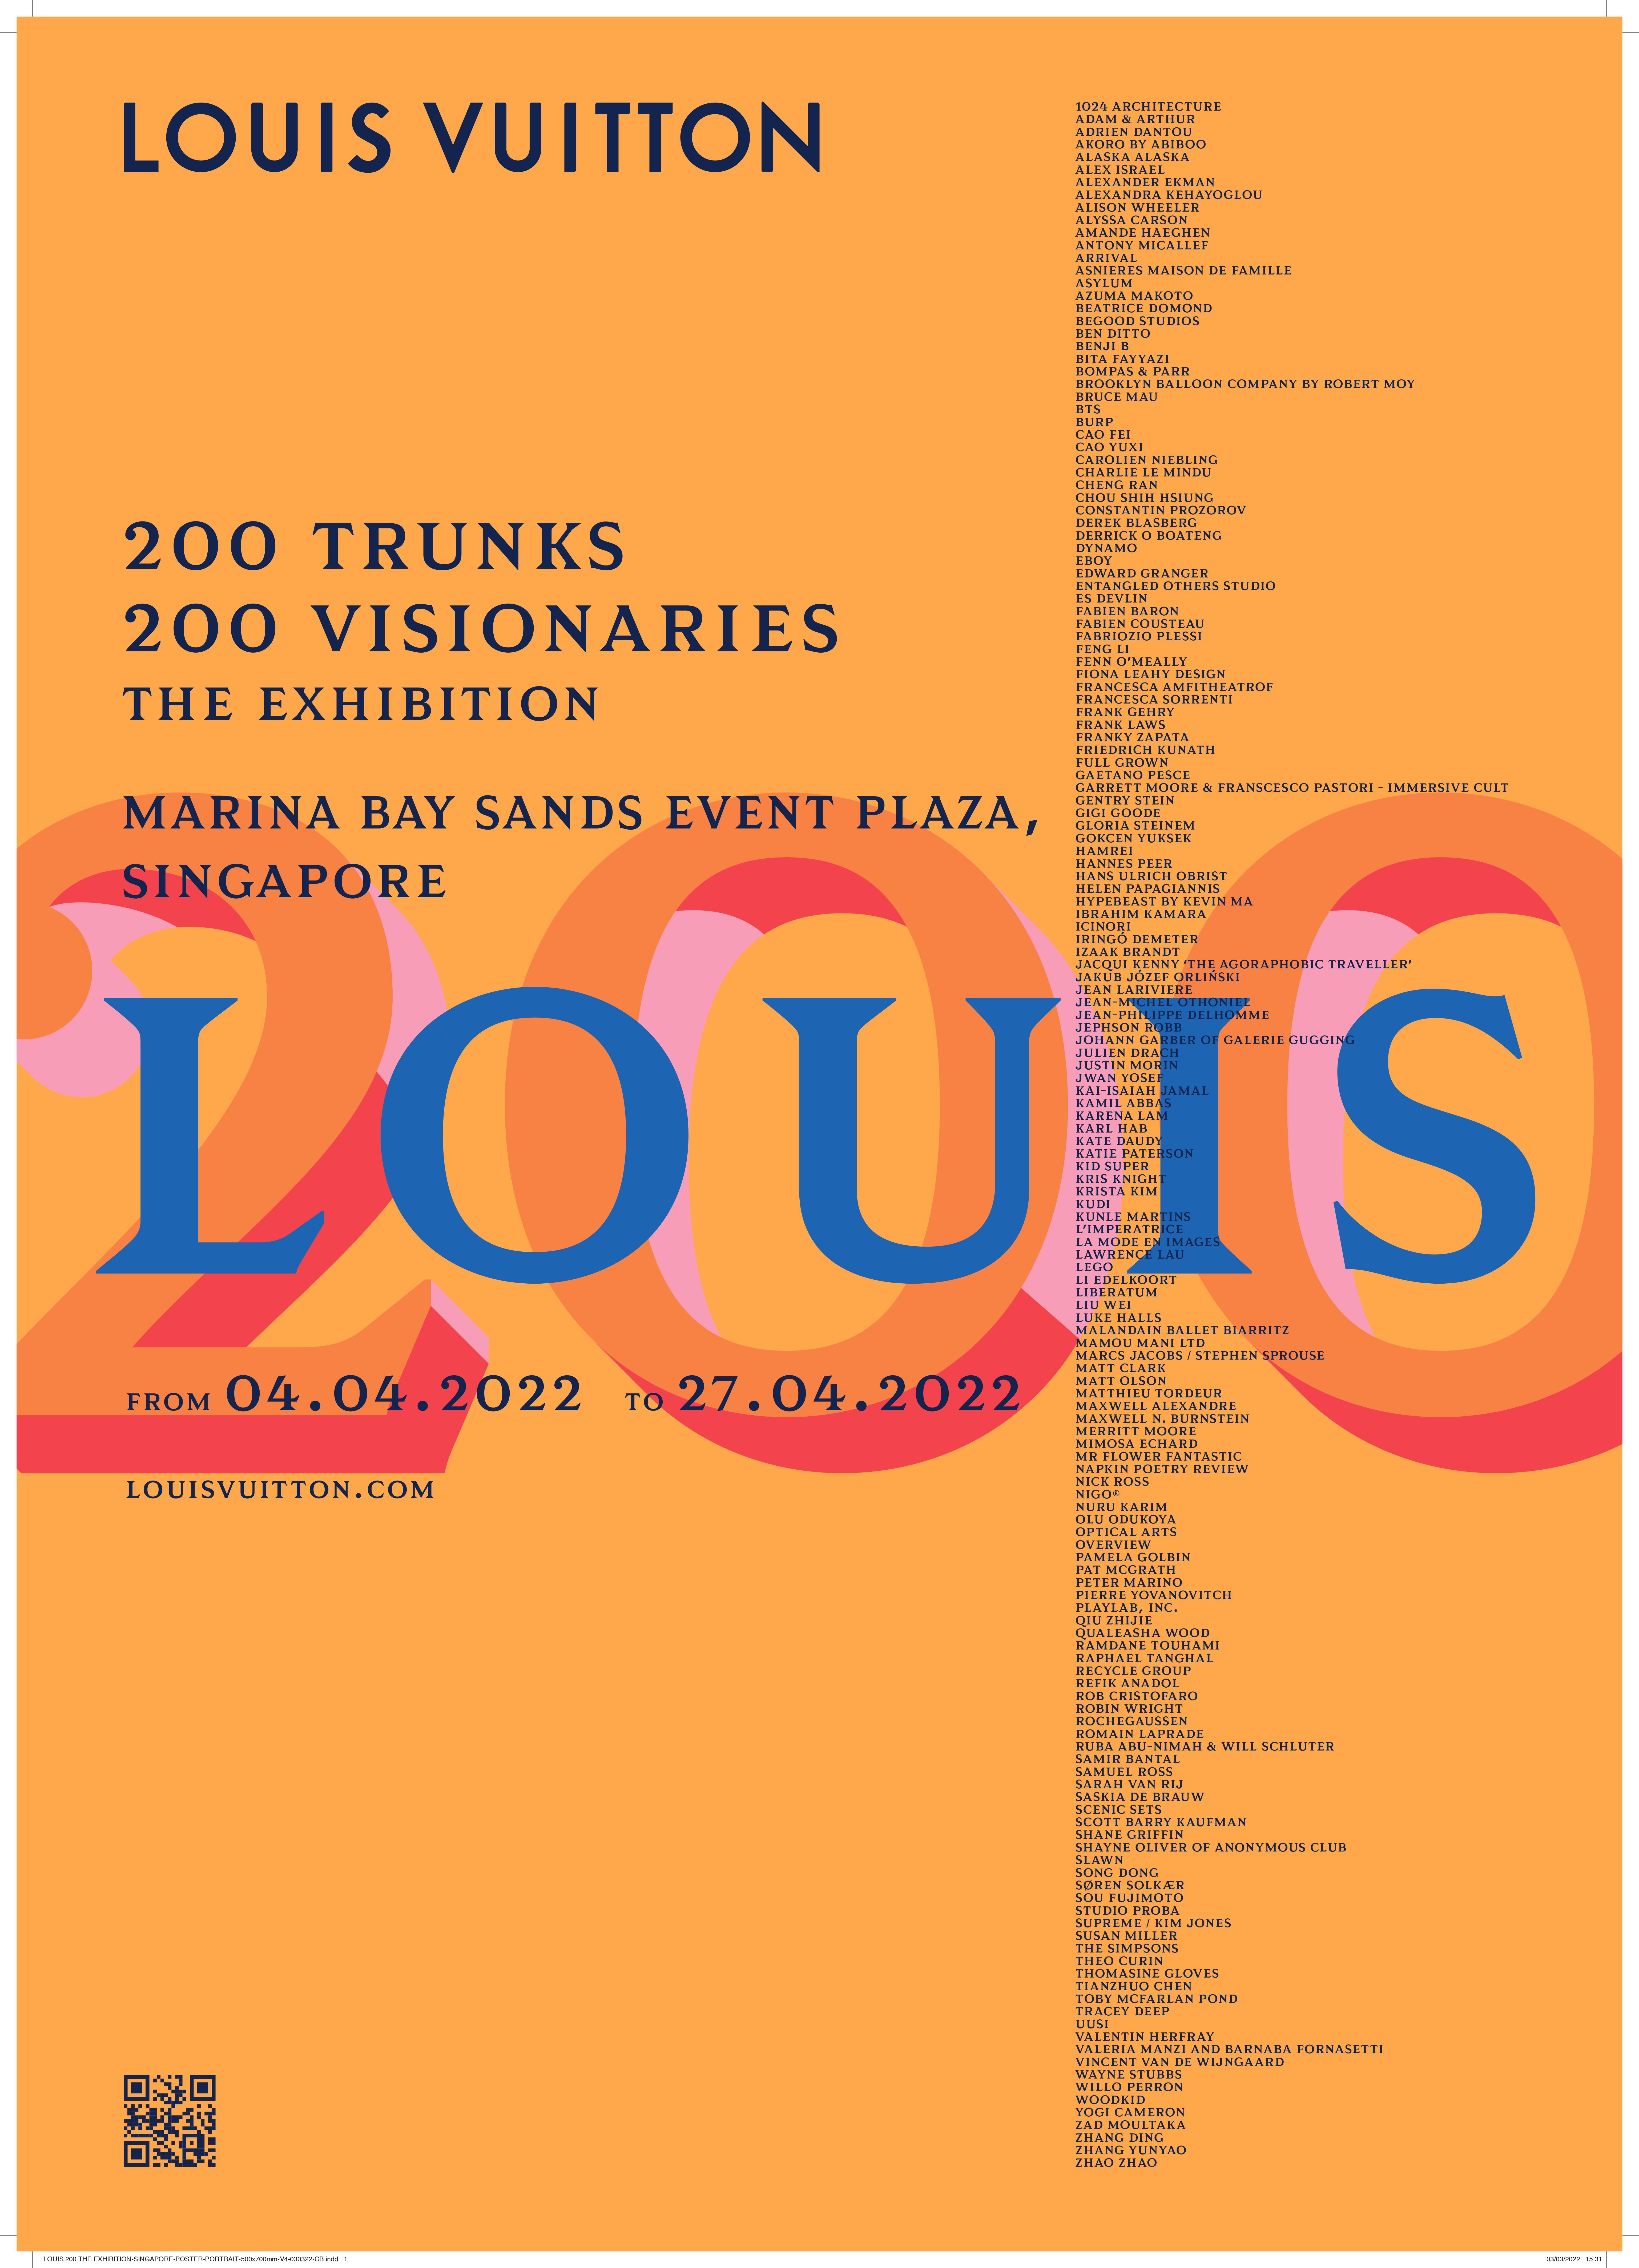 Two Hundred Trunks, Two Hundred Visionaries